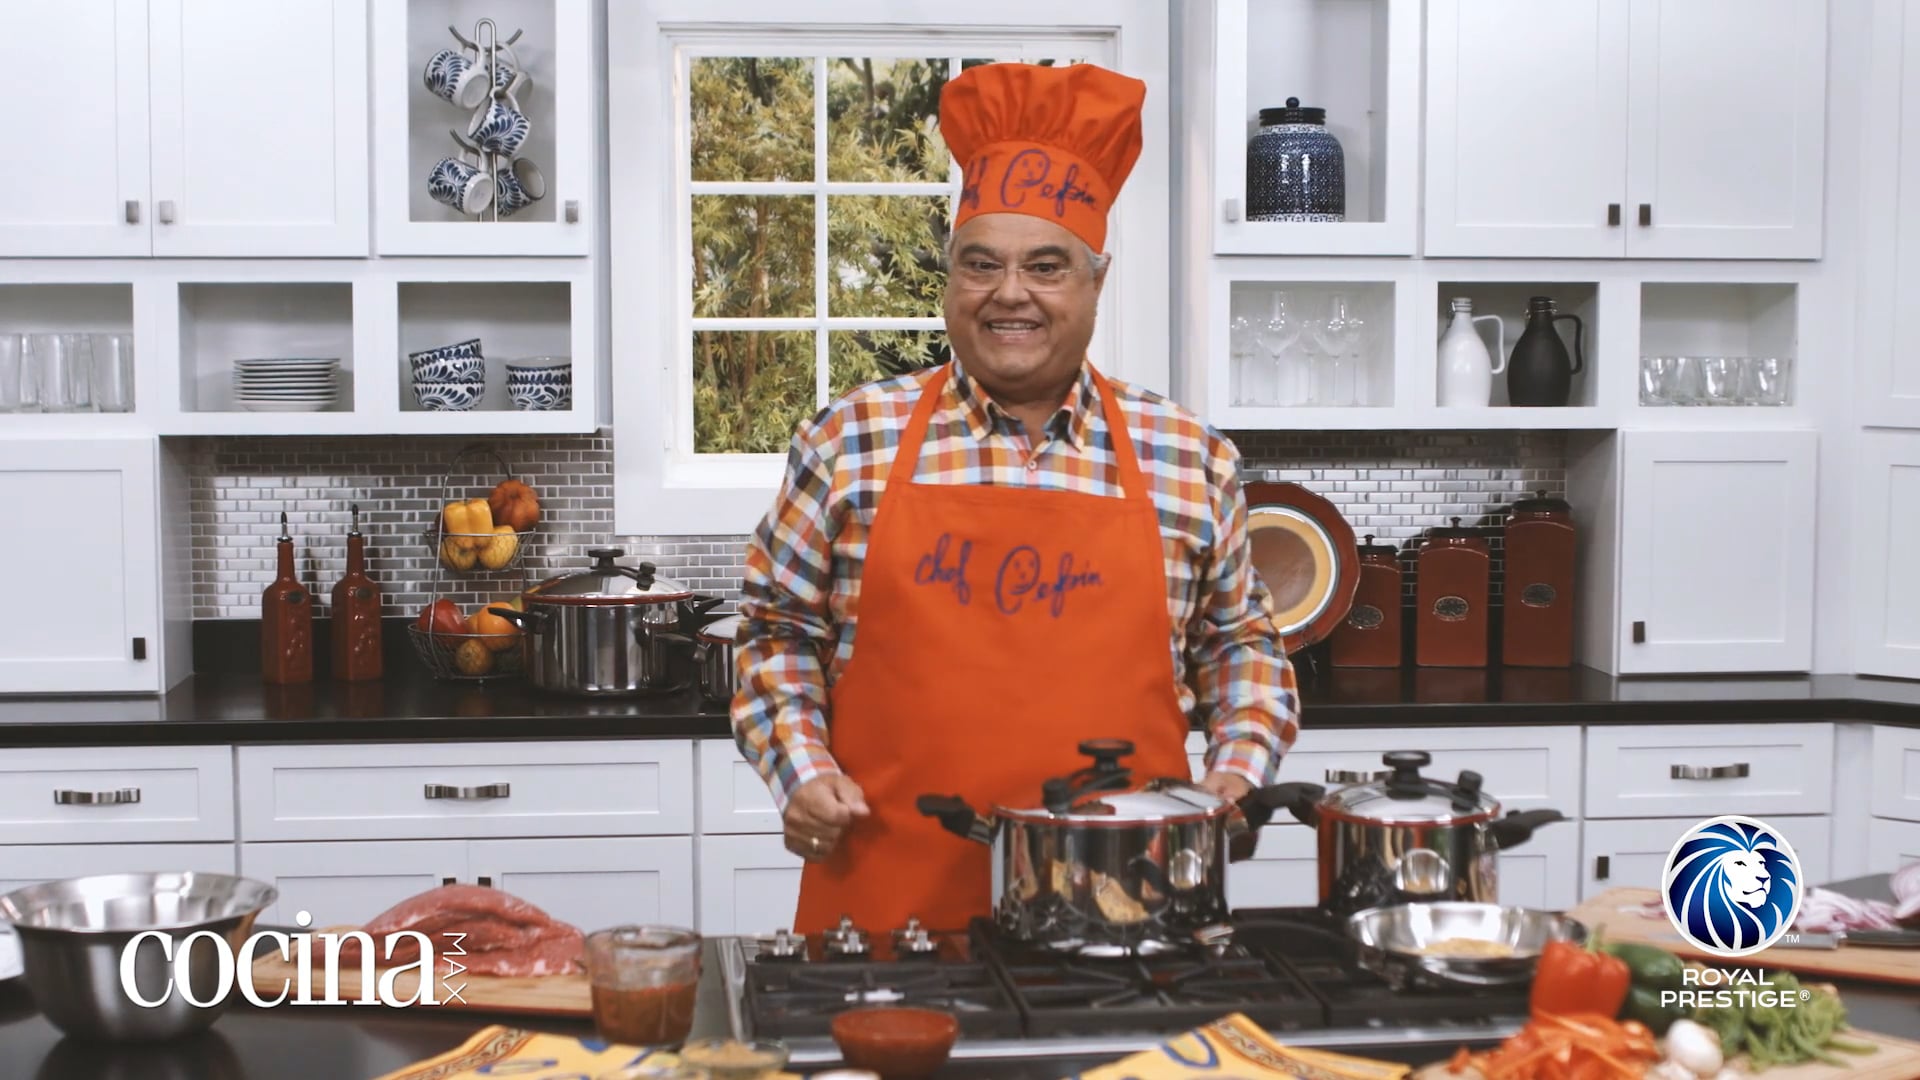 cocinaMAX™ - Chef Pepín y la receta Ropa Vieja al estilo Royal Prestige®.  on Vimeo